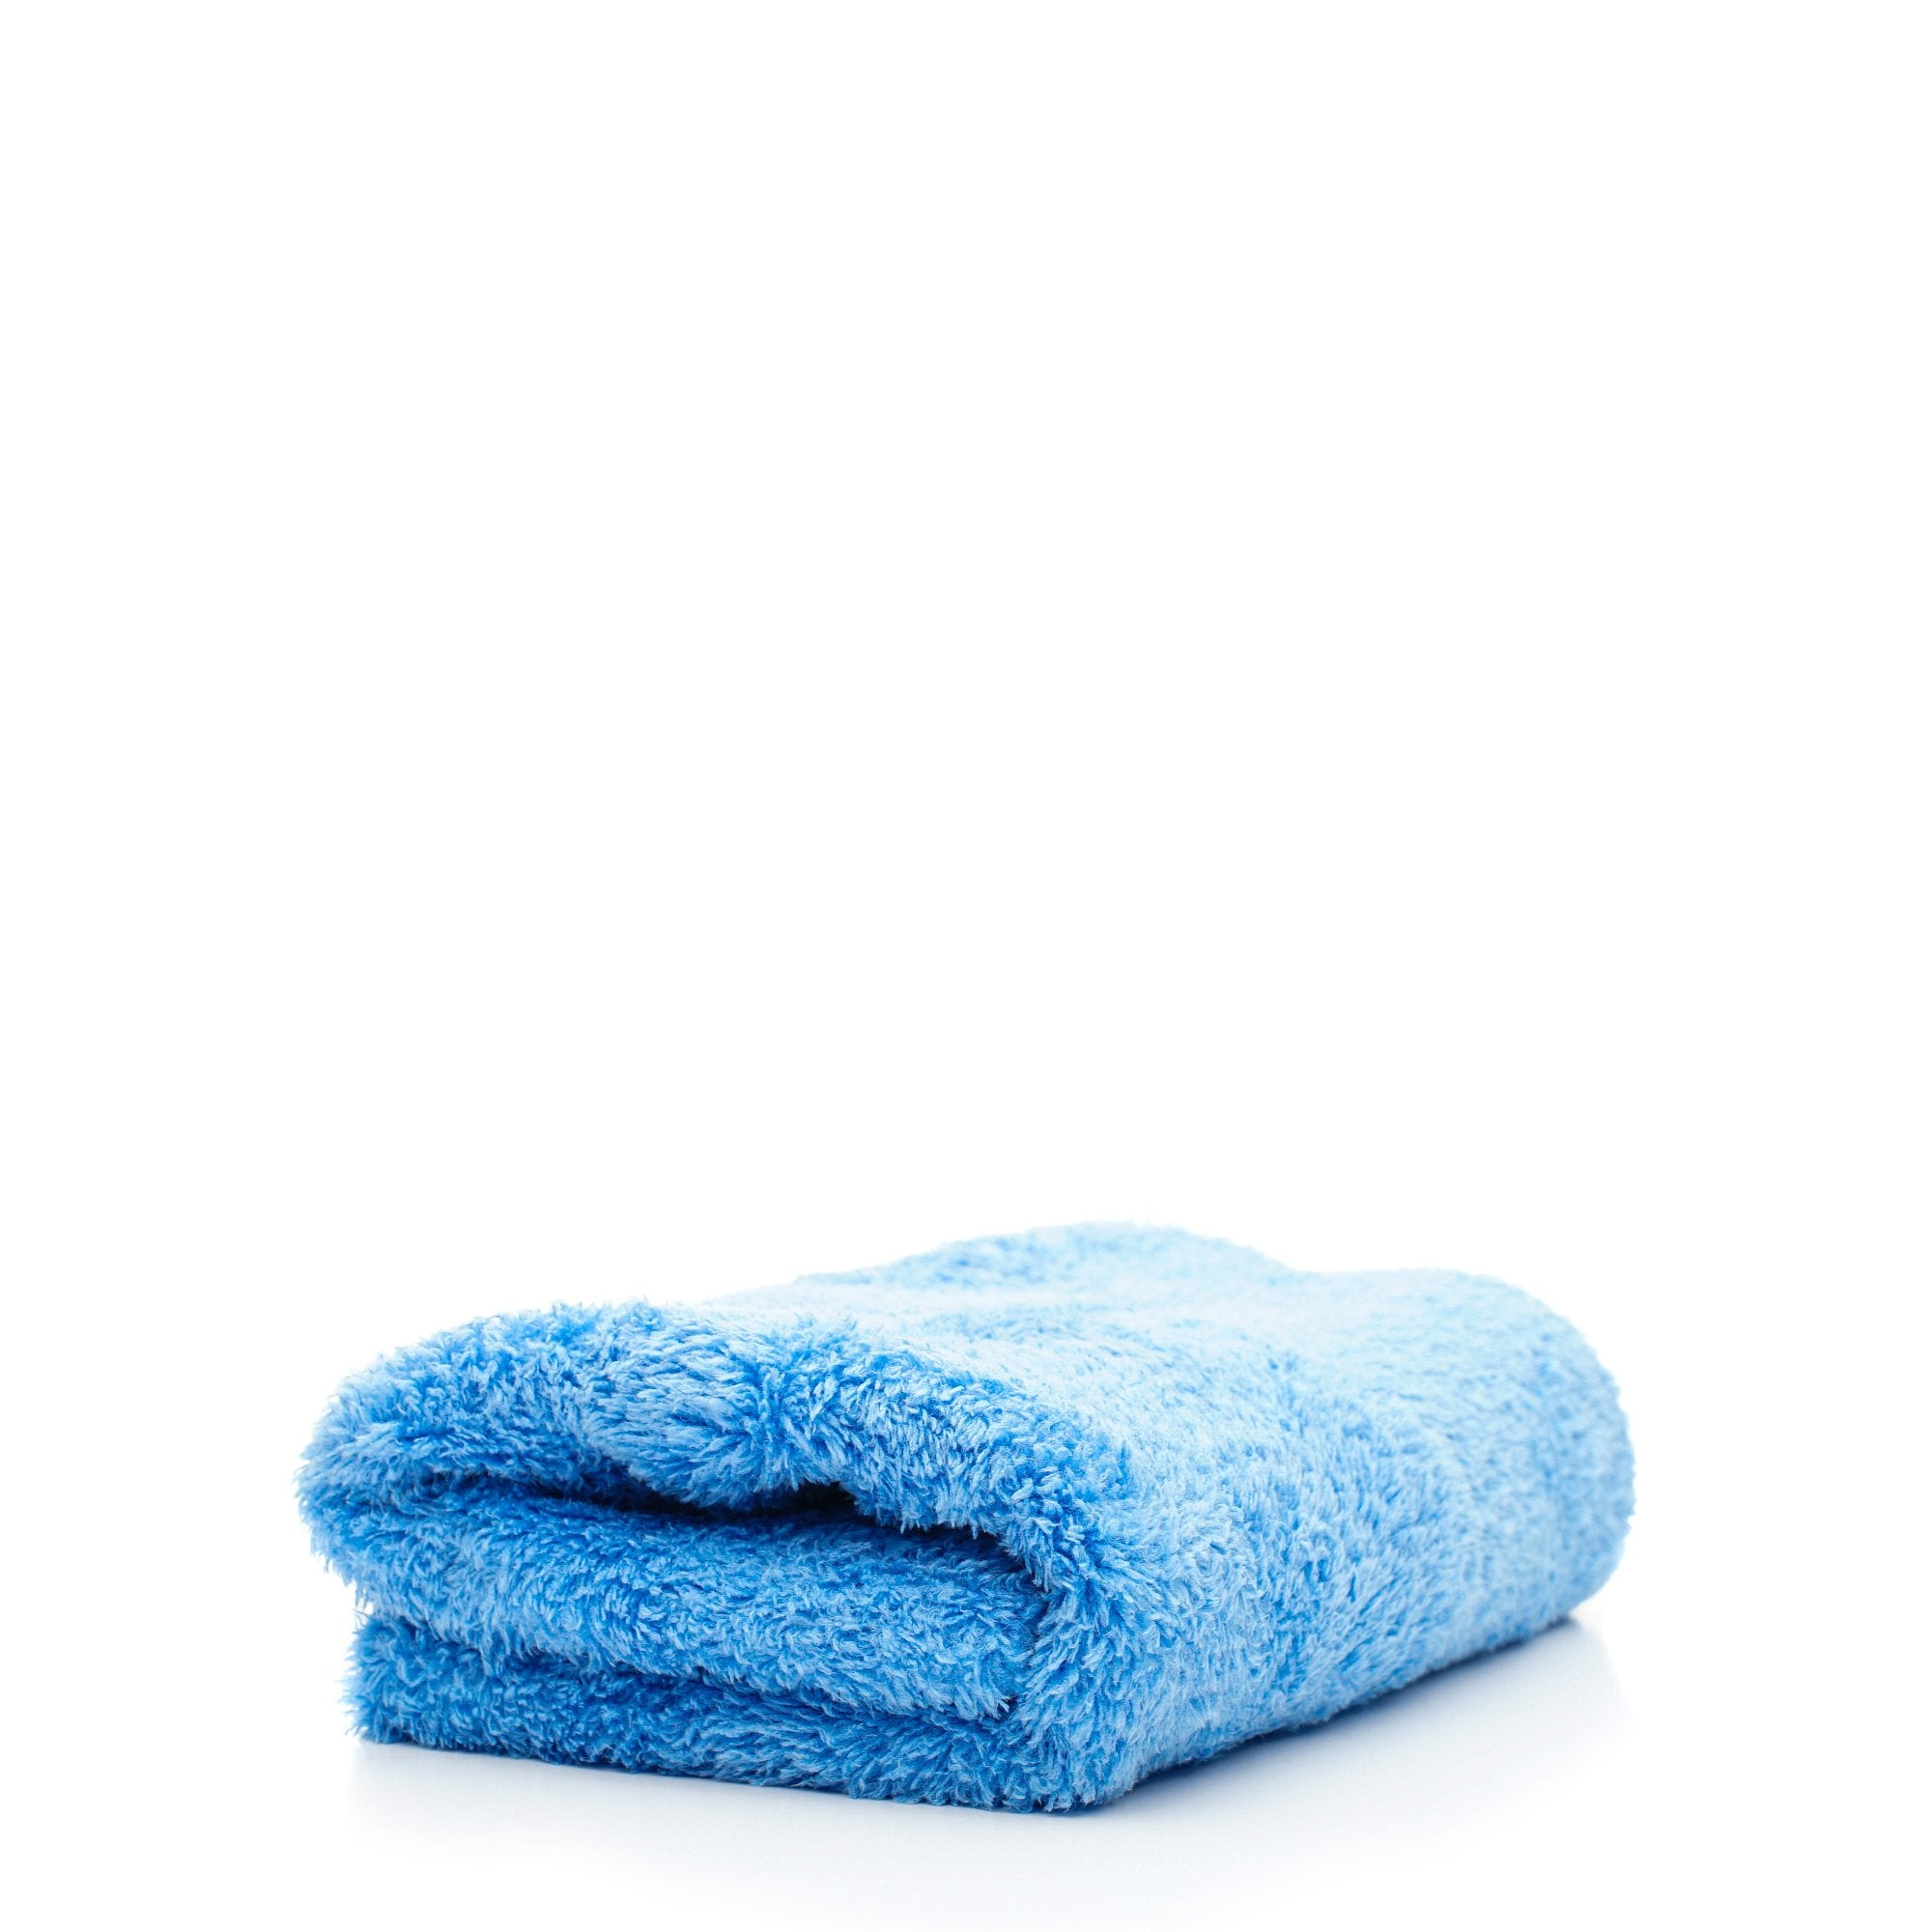 DOUBLE PLUSH EDGELESS MICROFIBER TOWEL (BLUE)